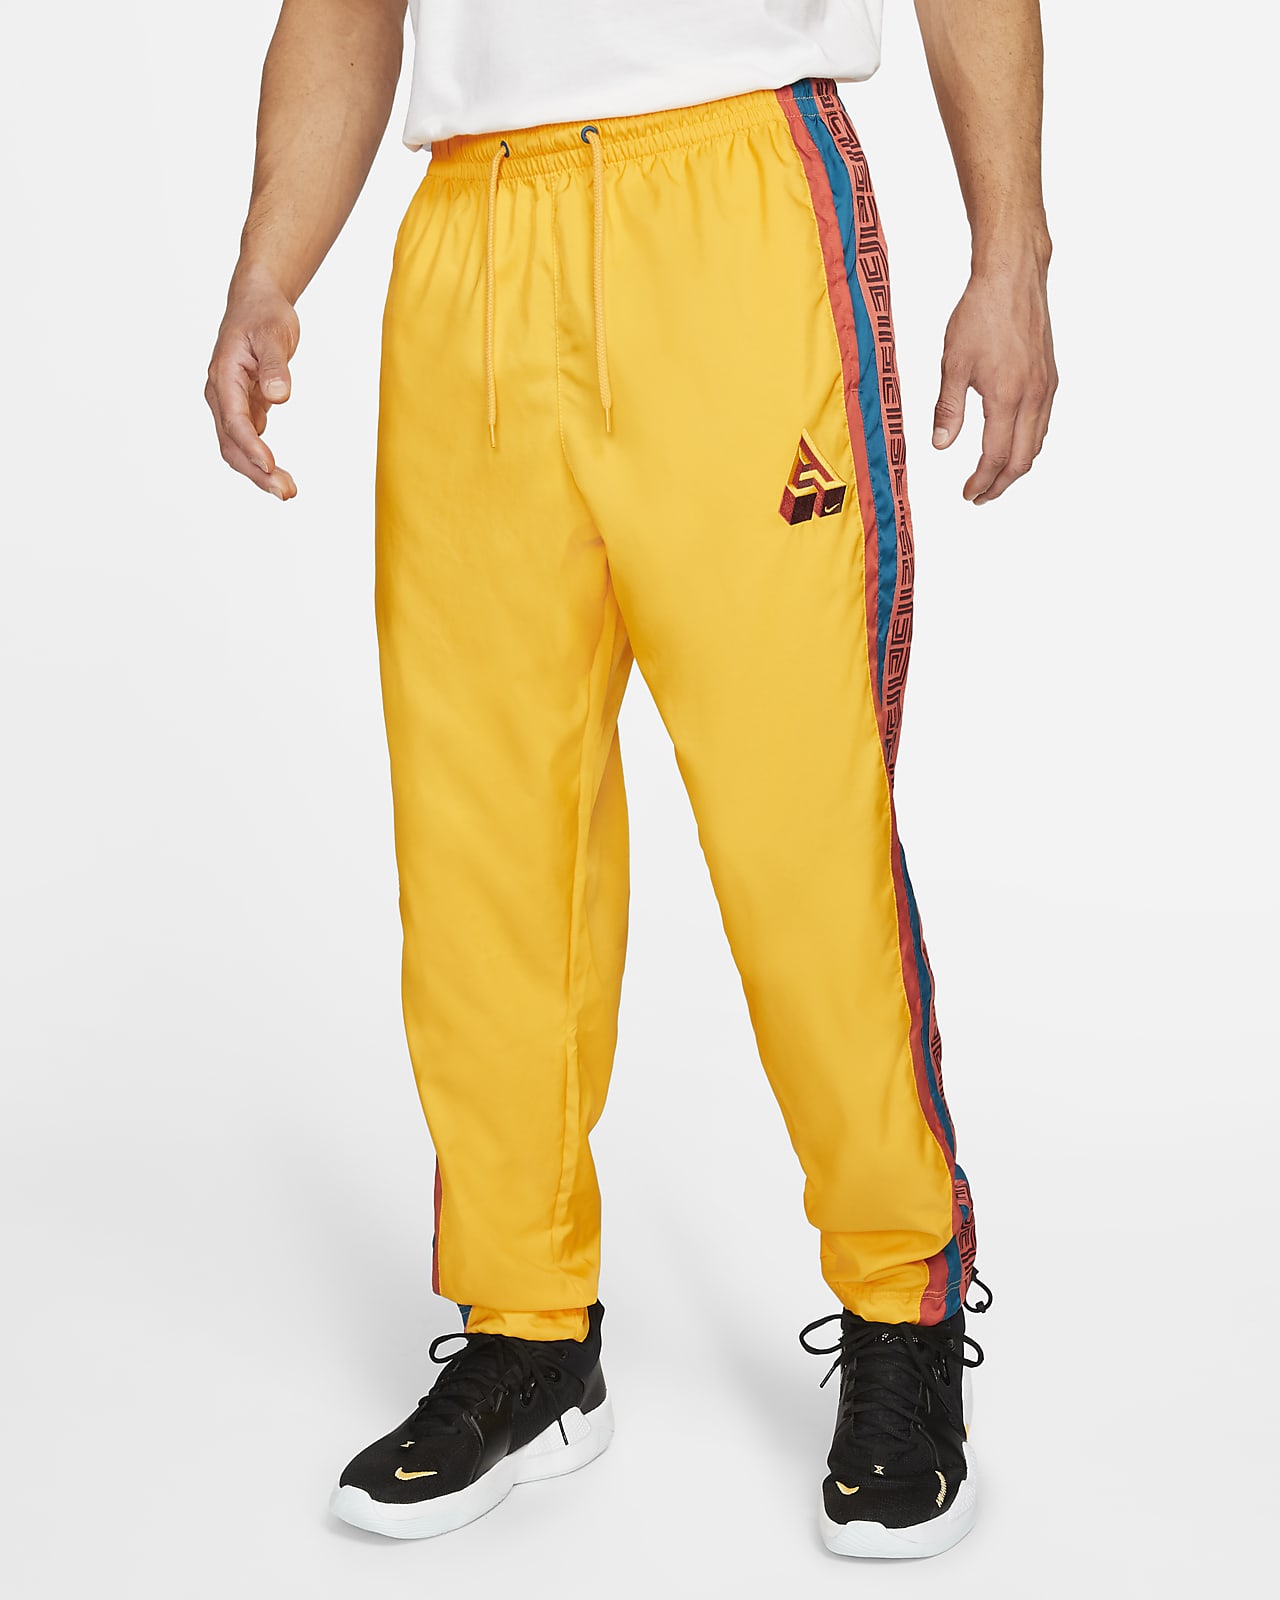 nike yellow track pants